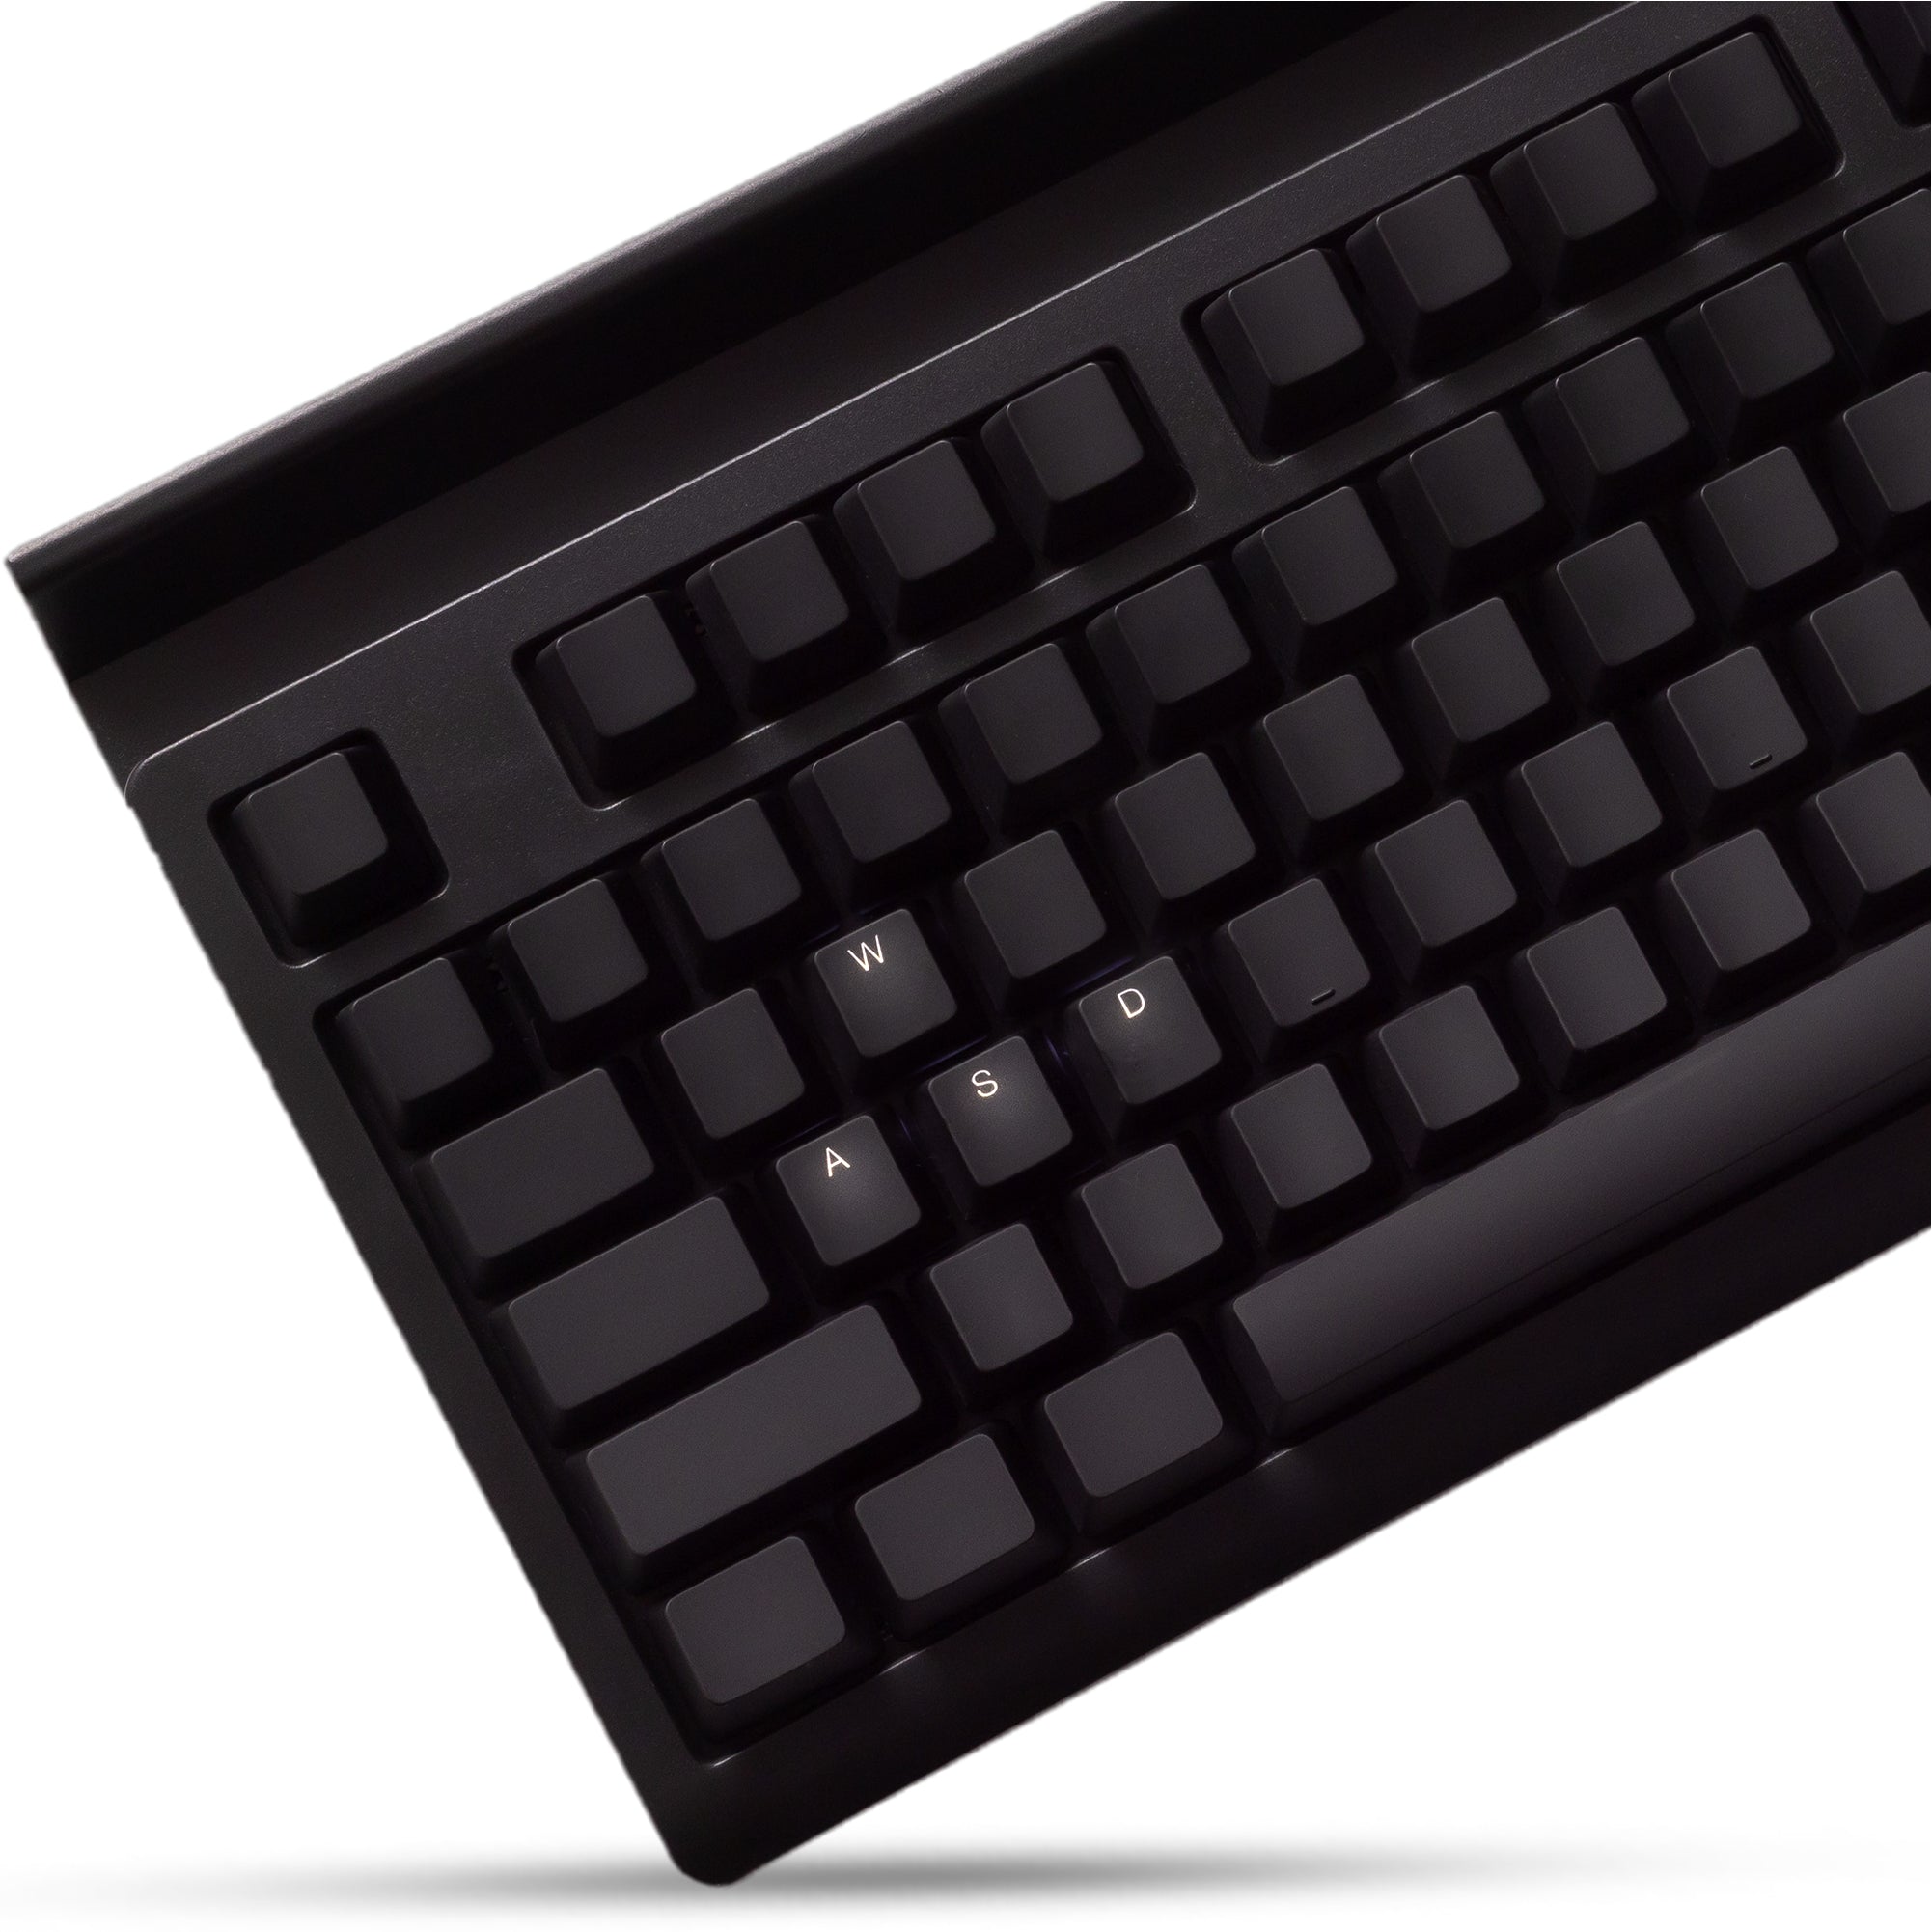 KeyMaster Blank or Visible Gaming Computer Keyboard with Show/Hide Keys